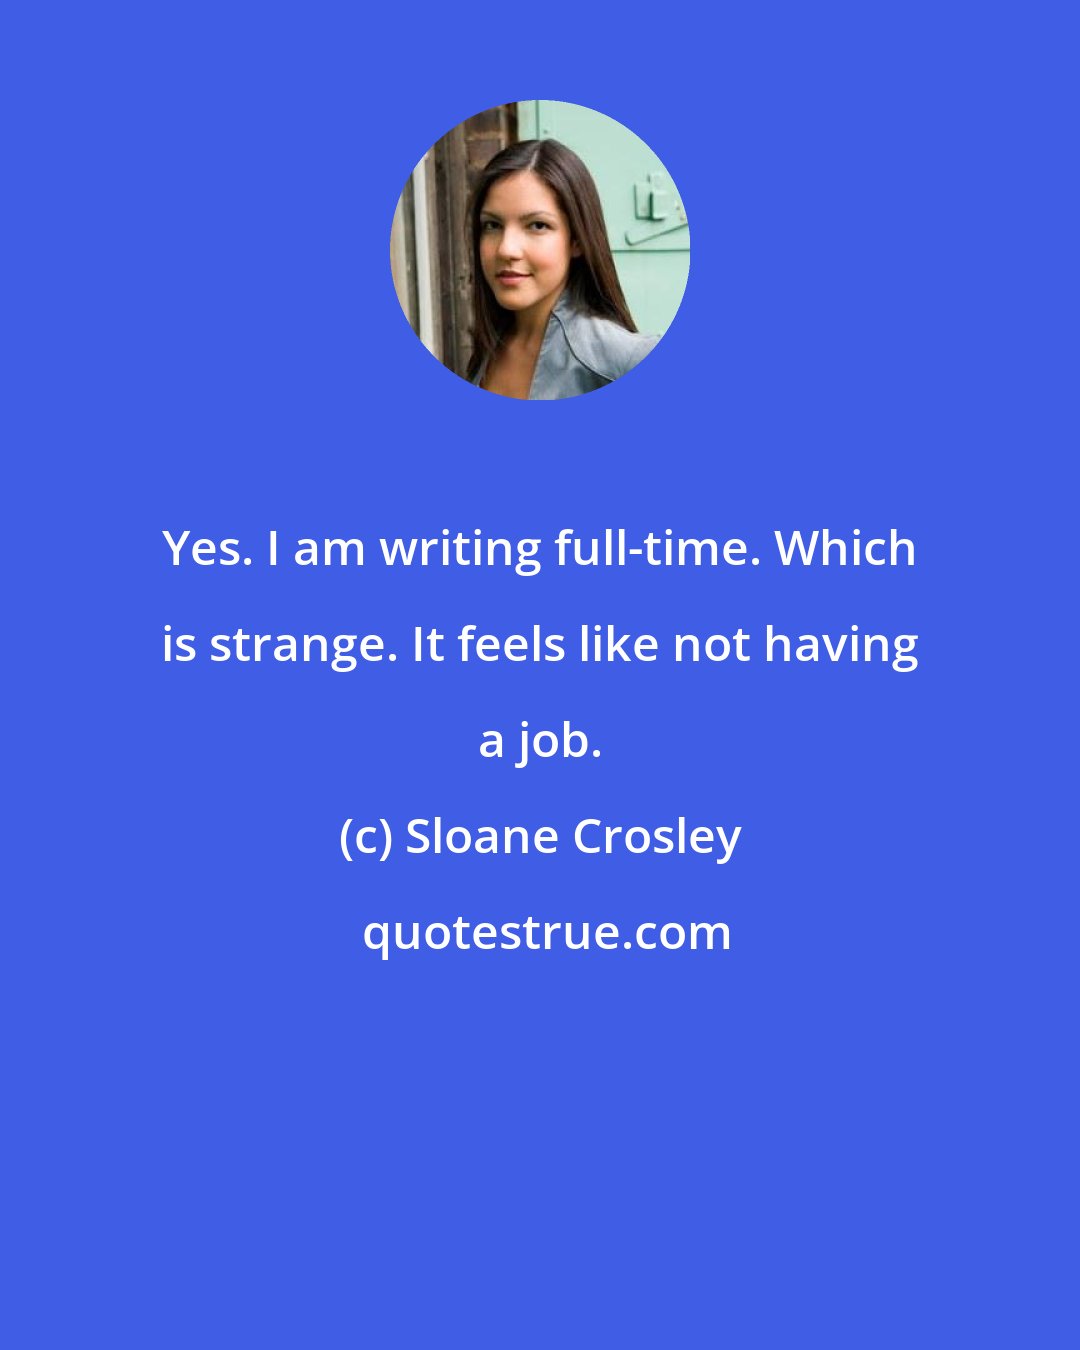 Sloane Crosley: Yes. I am writing full-time. Which is strange. It feels like not having a job.